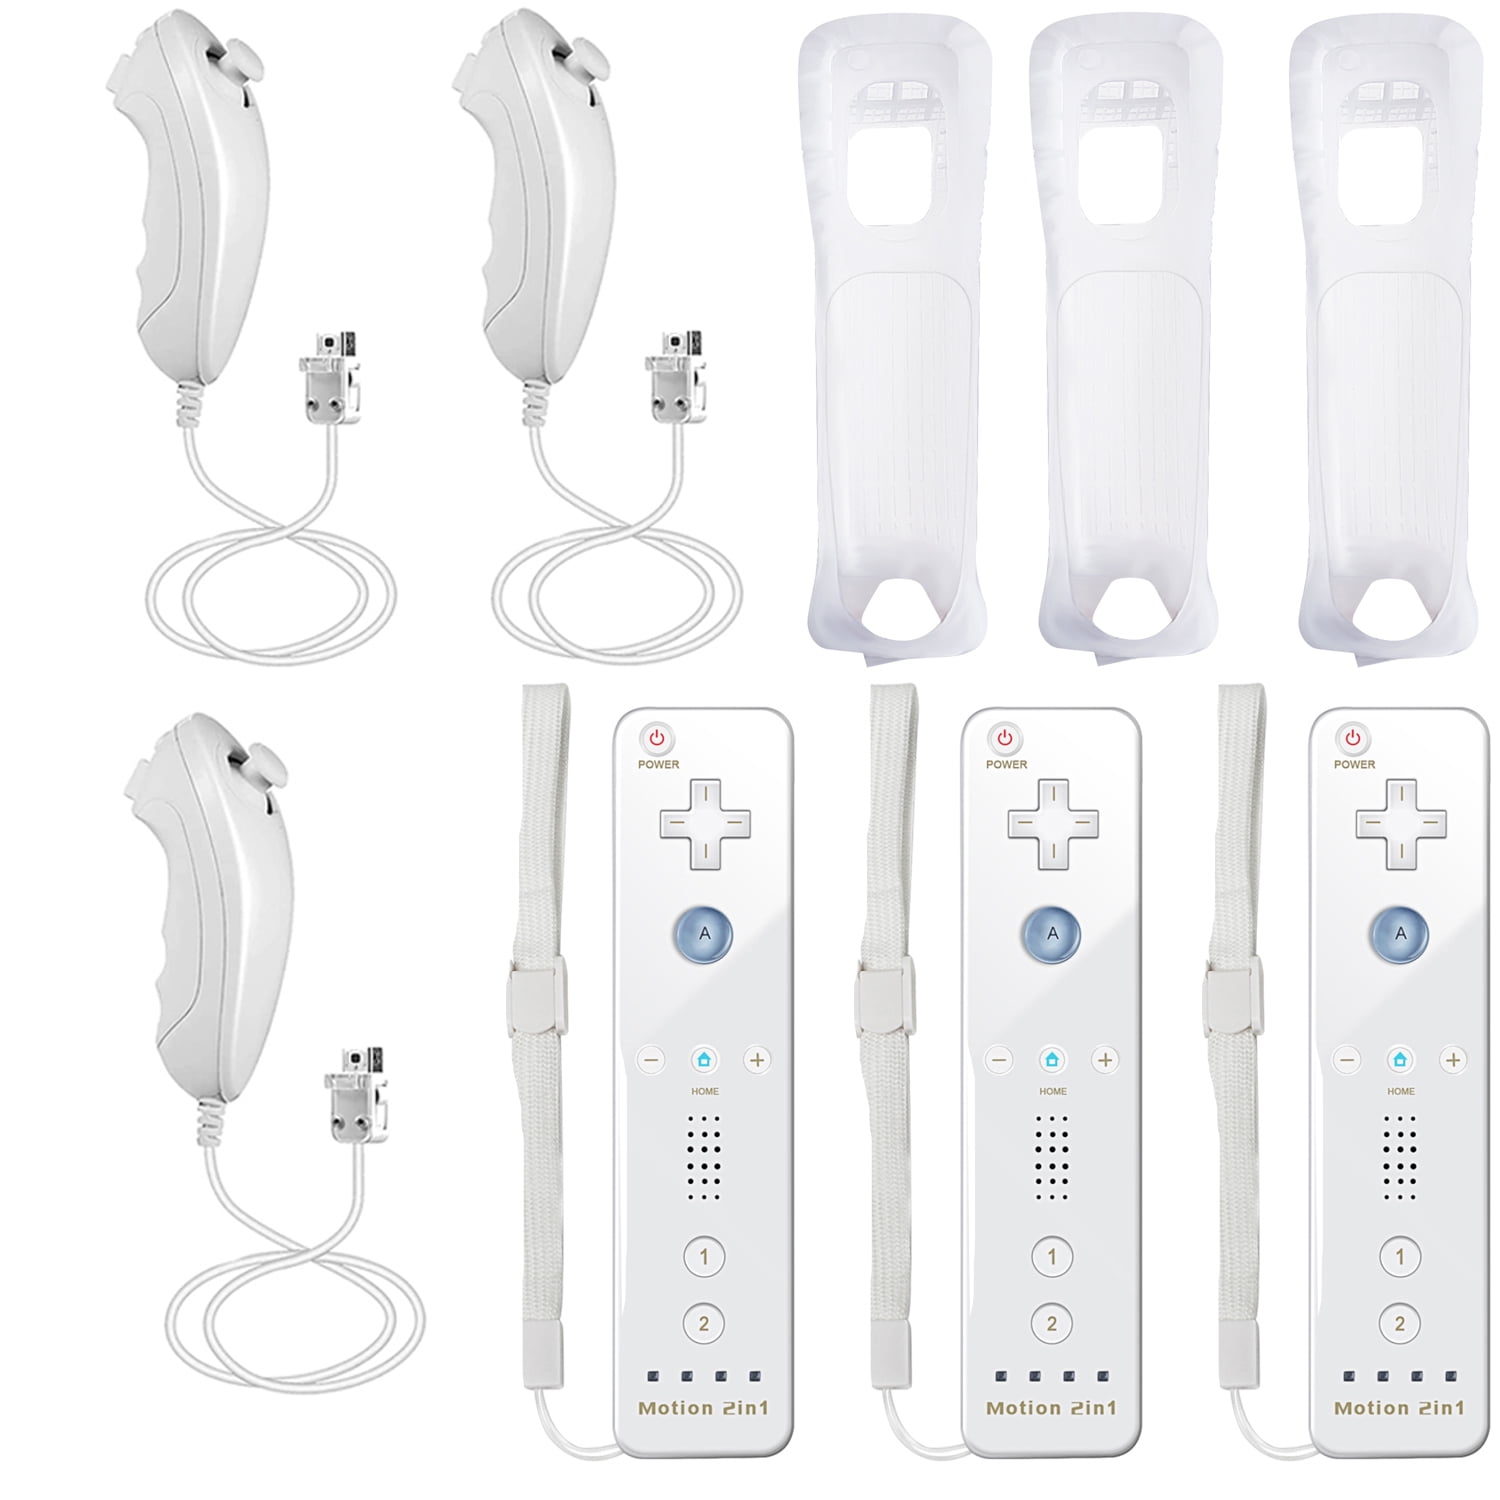 Wii Remote™ with MotionPlus™ - Blue - Sam's Club